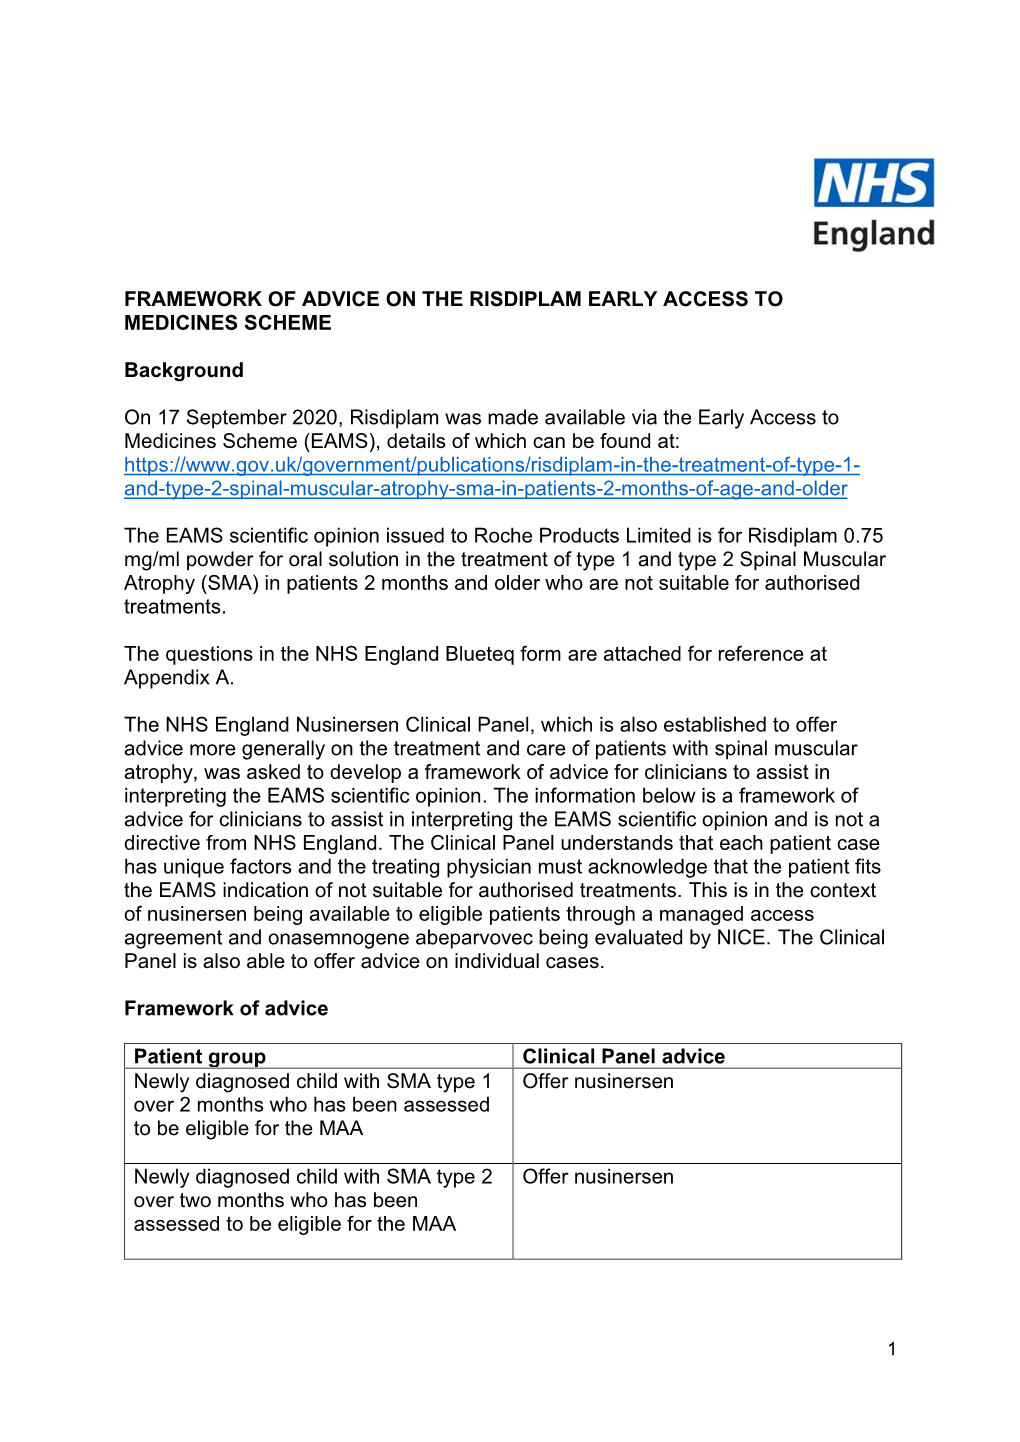 NHS England Risdiplam EAMS Framework